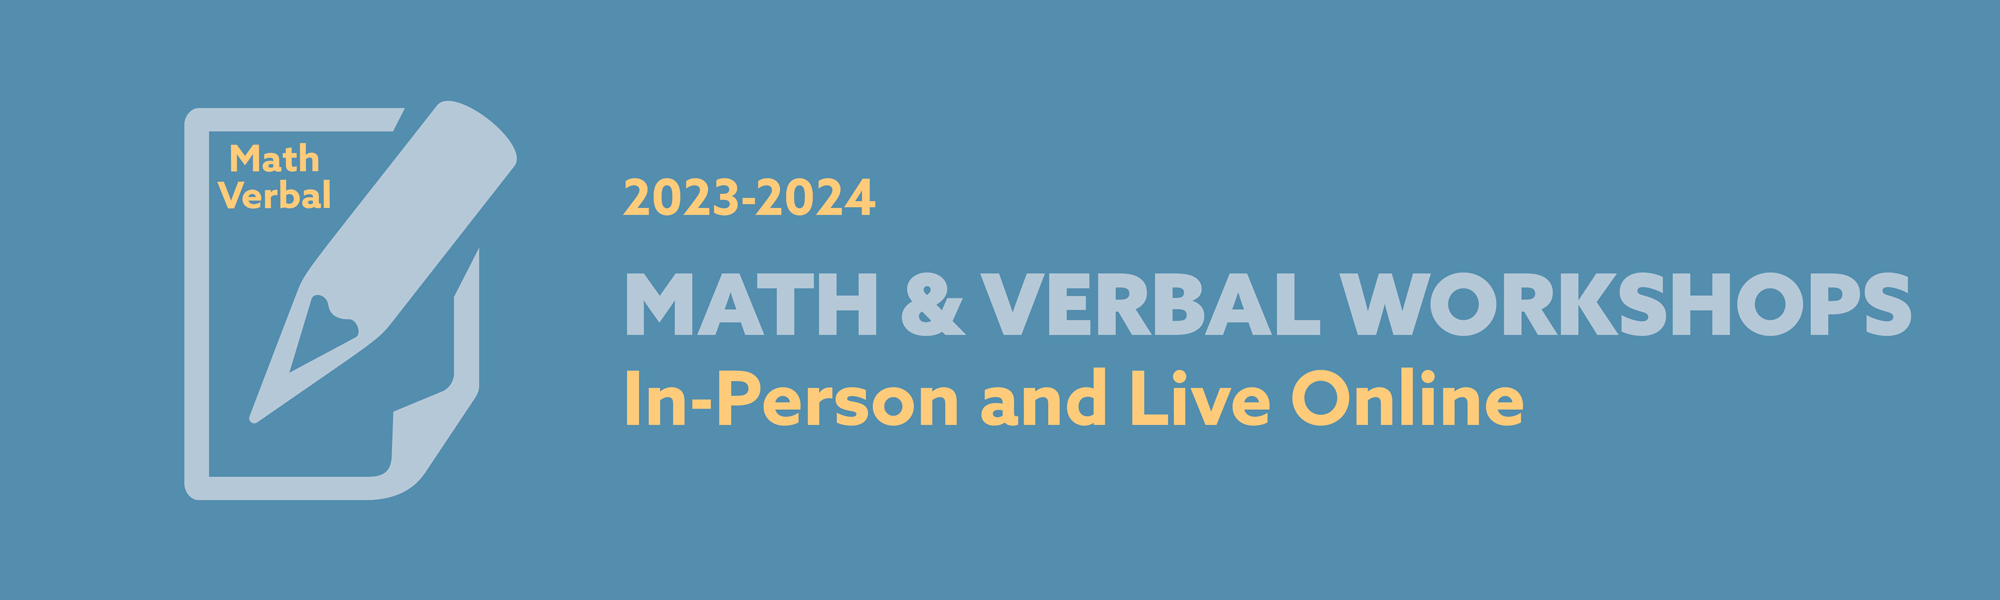 Math & Verbal Workshops 2023-2024